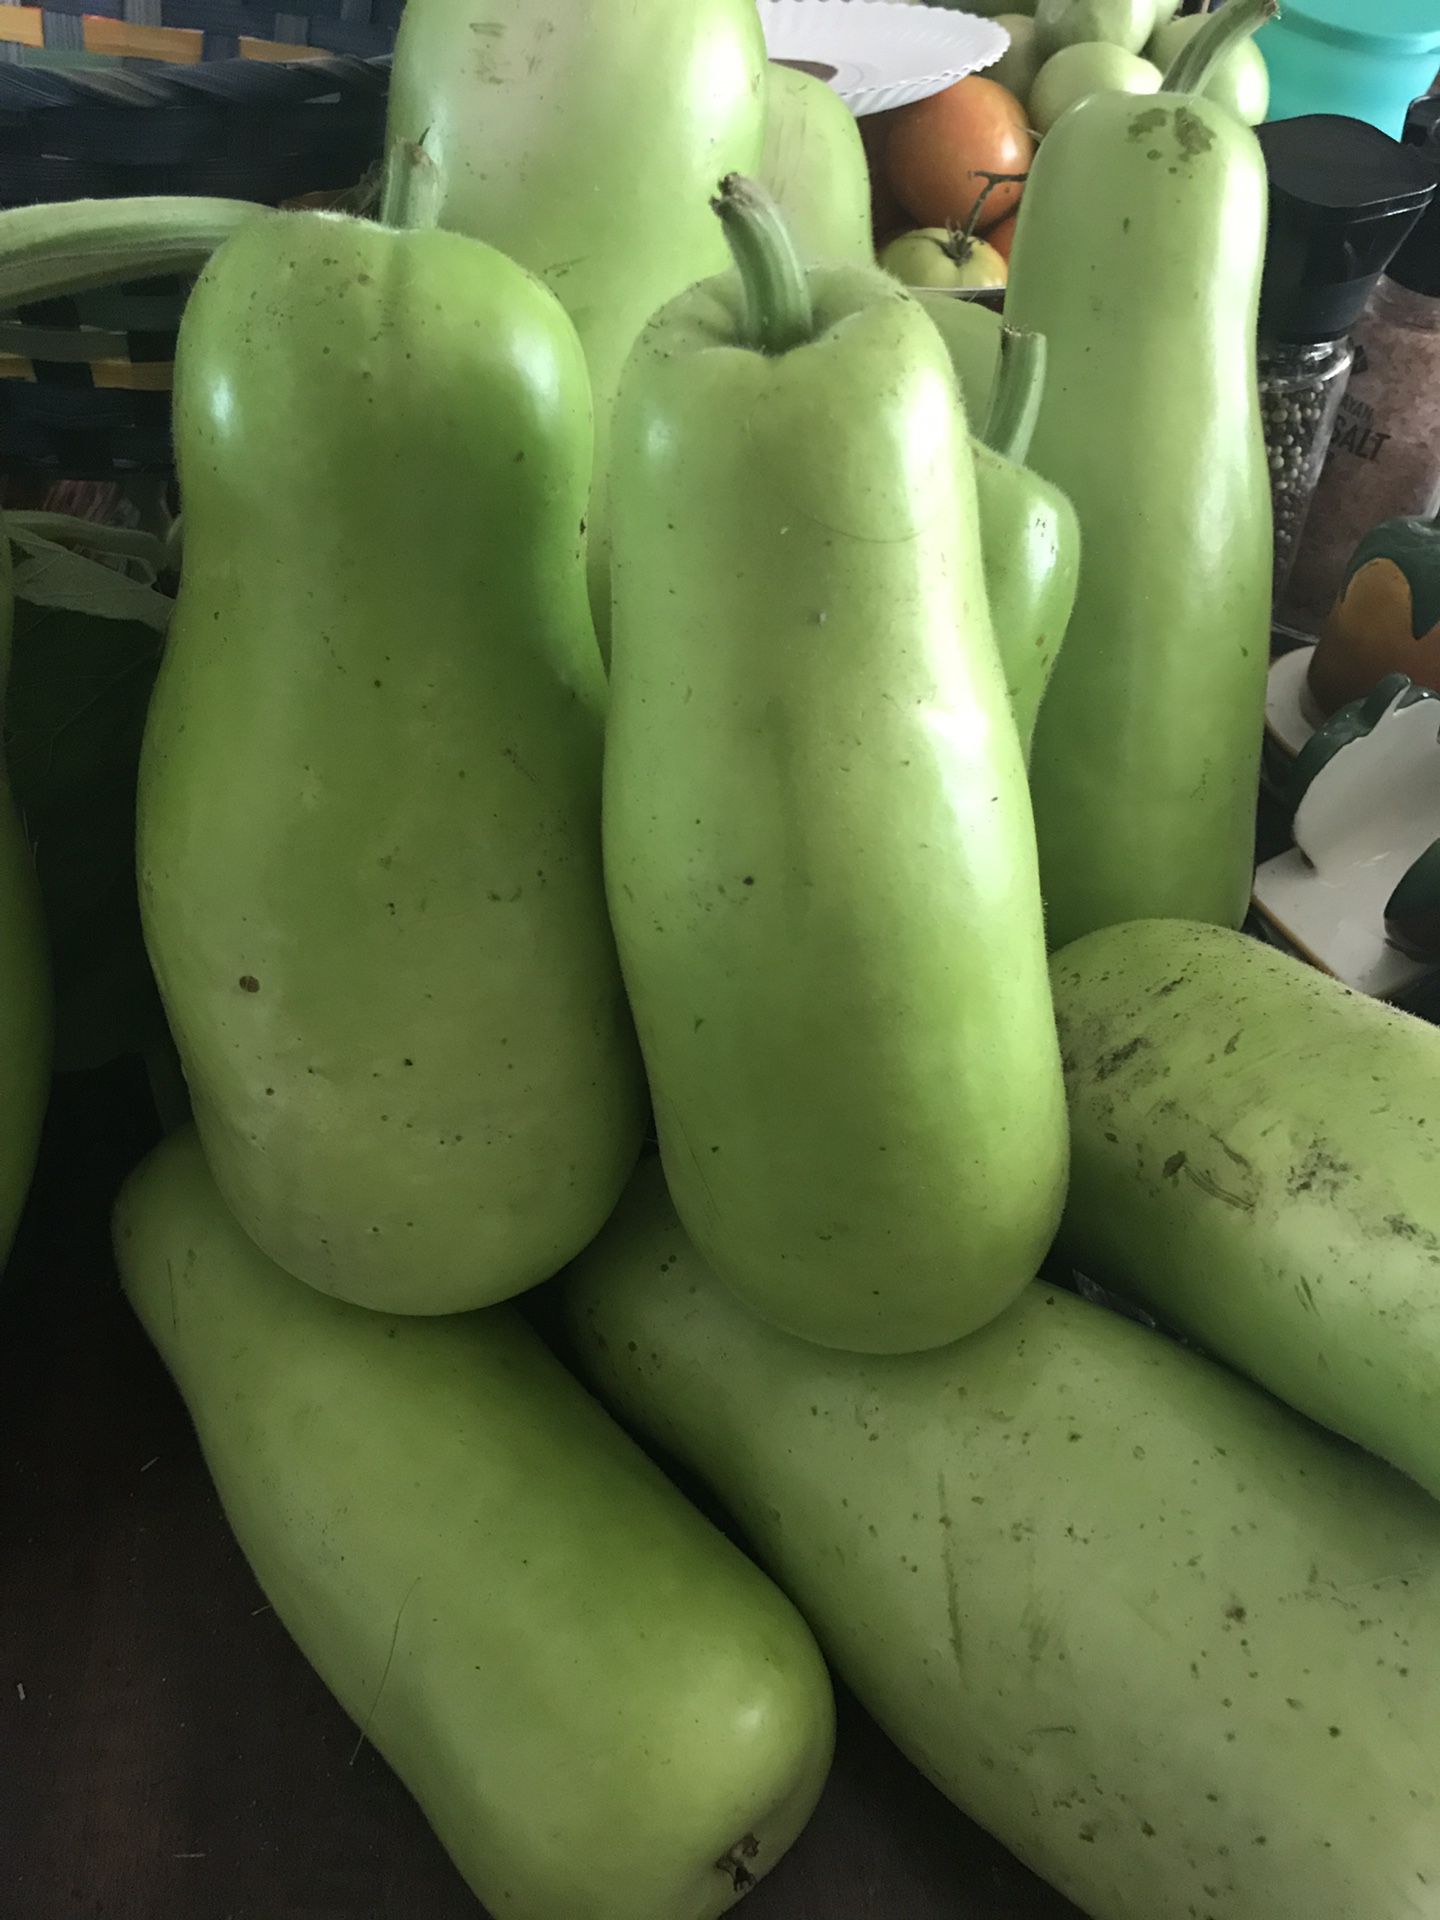 Loki Asian vegetables - squash like